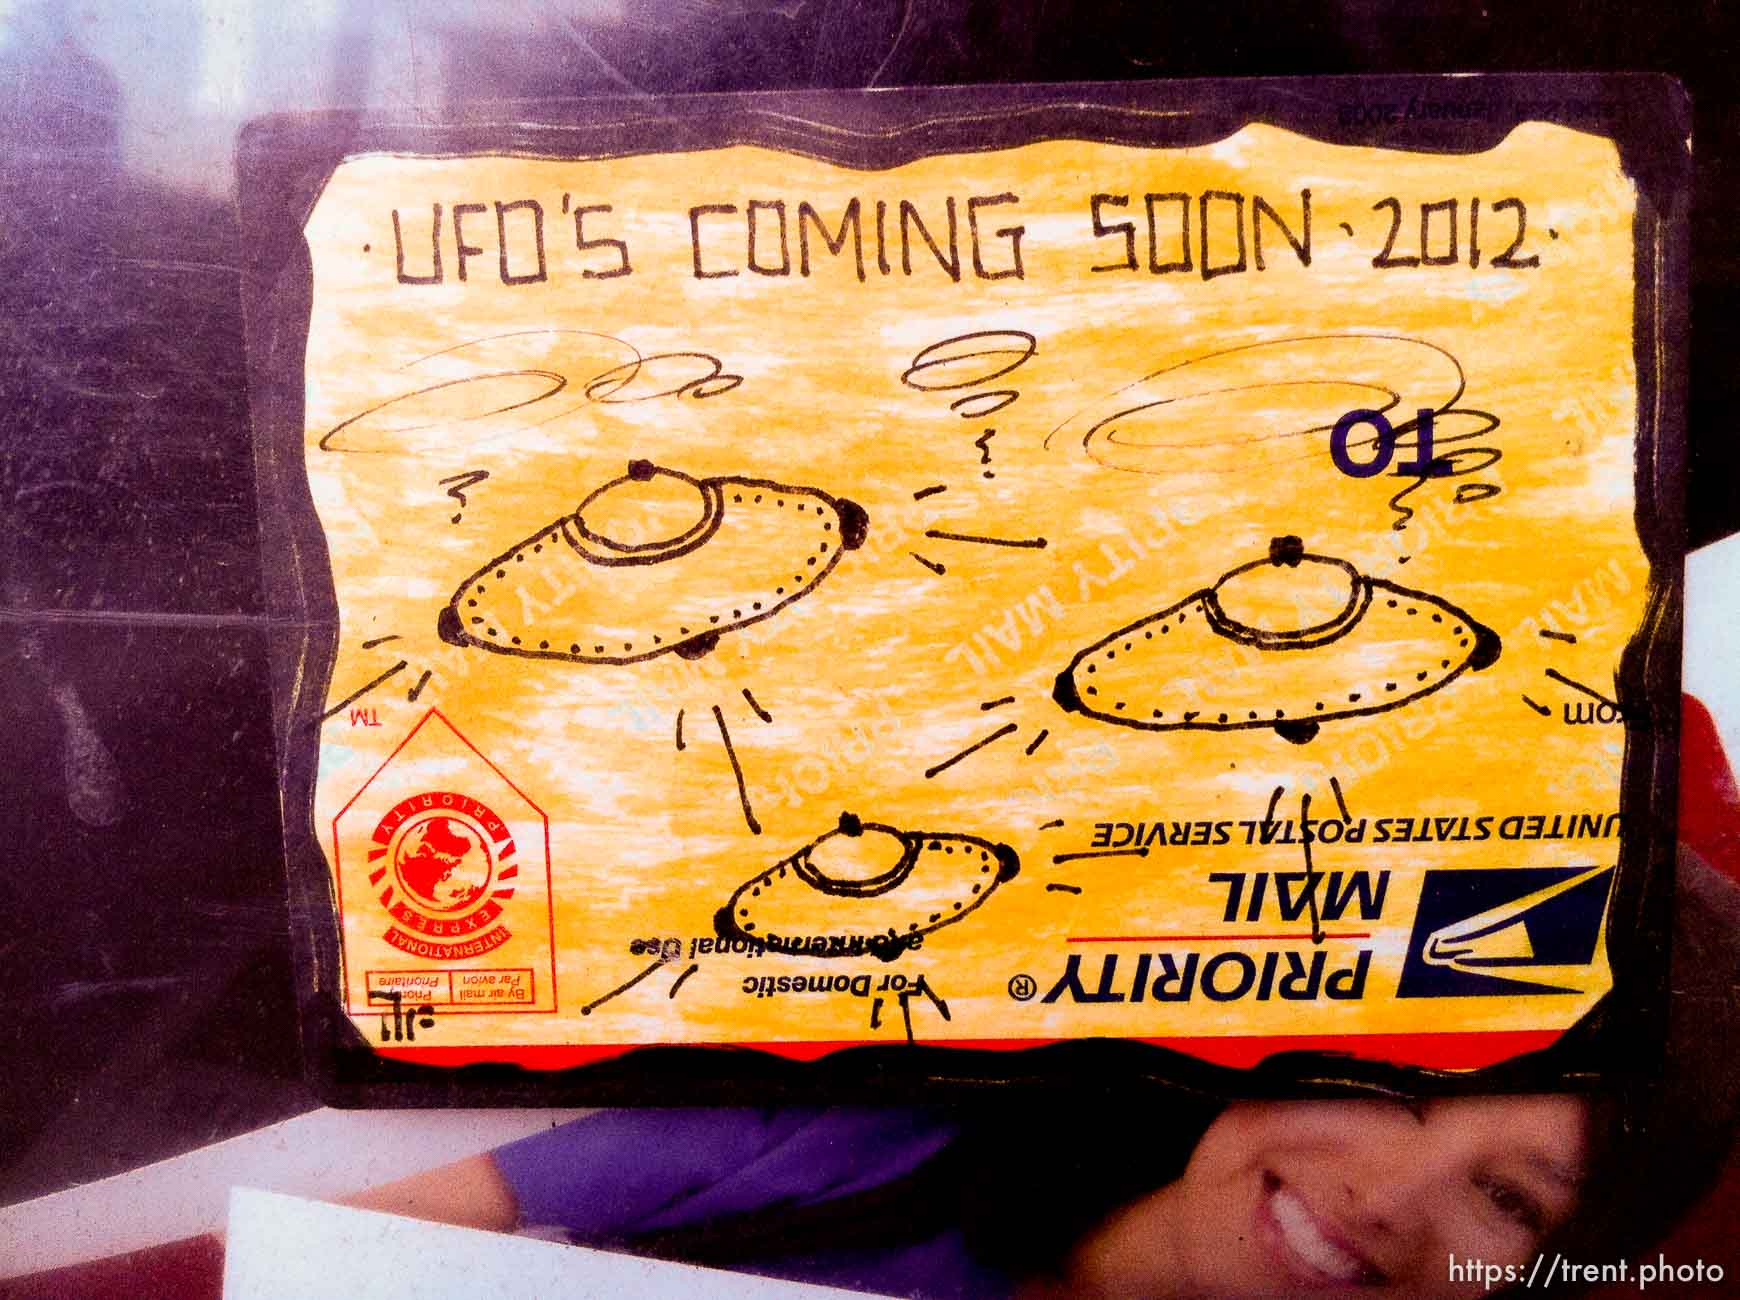 UFO’s Coming Soon